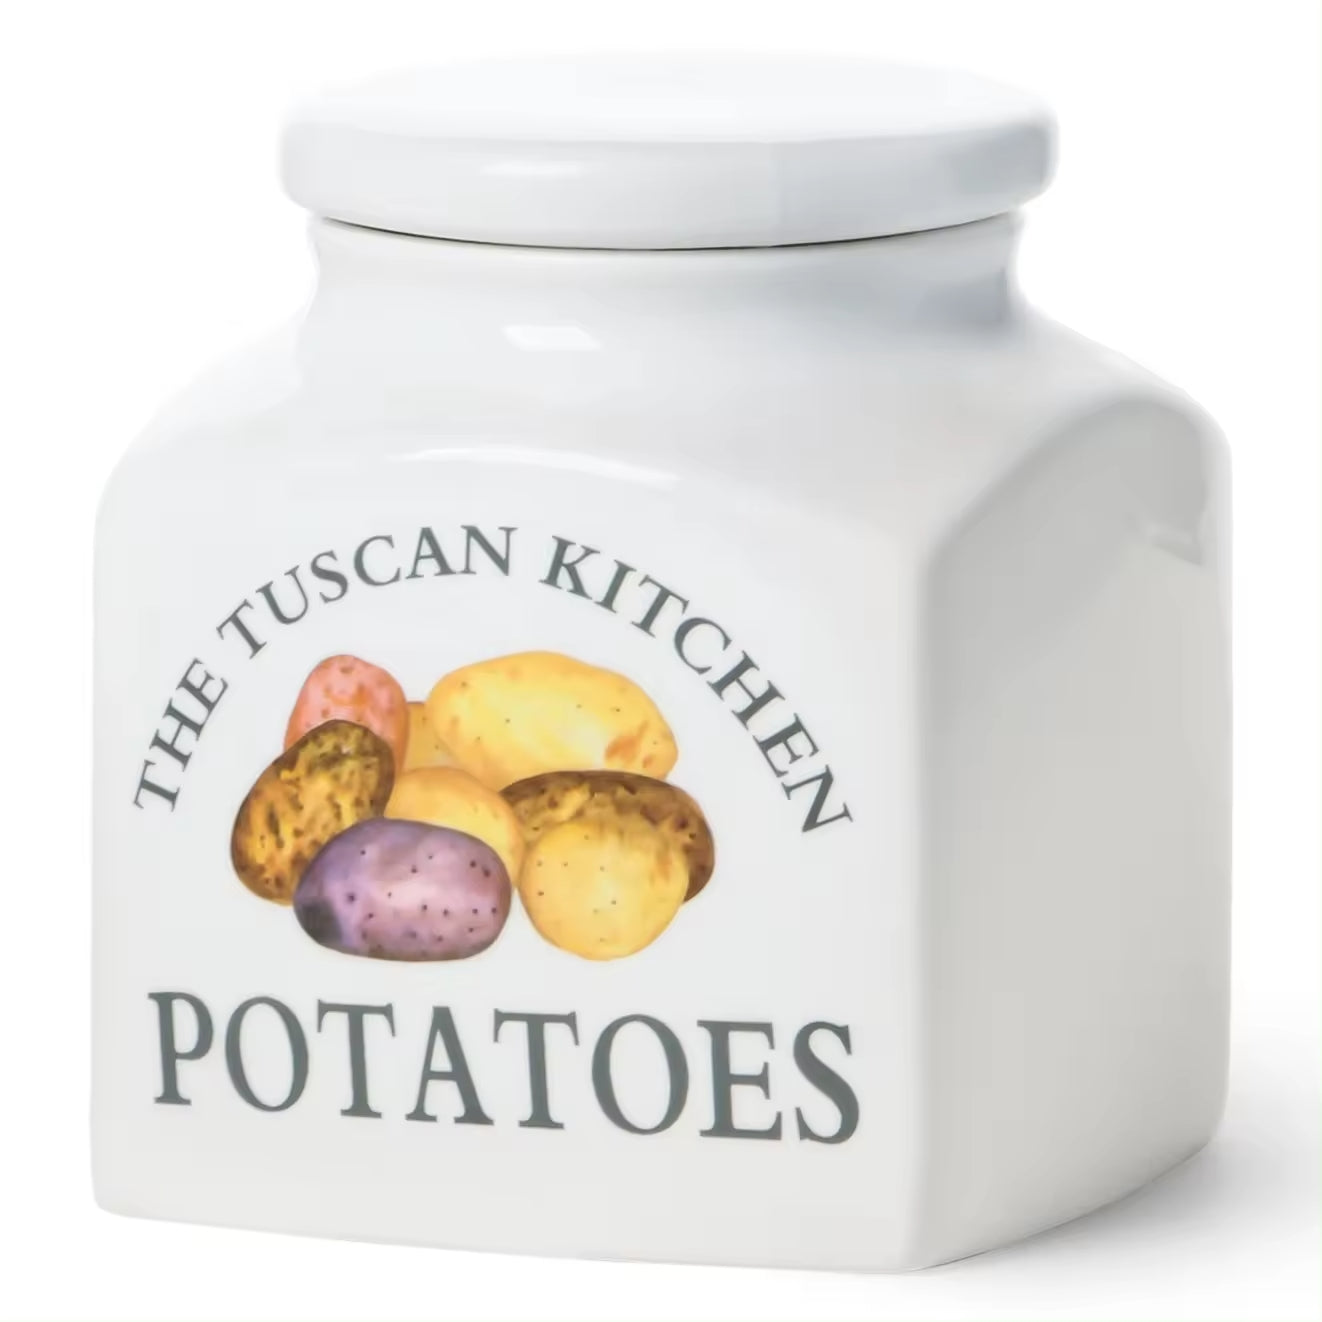 Tuscan Kitchen Porcelain Square 3.5L Cannister Potatoes